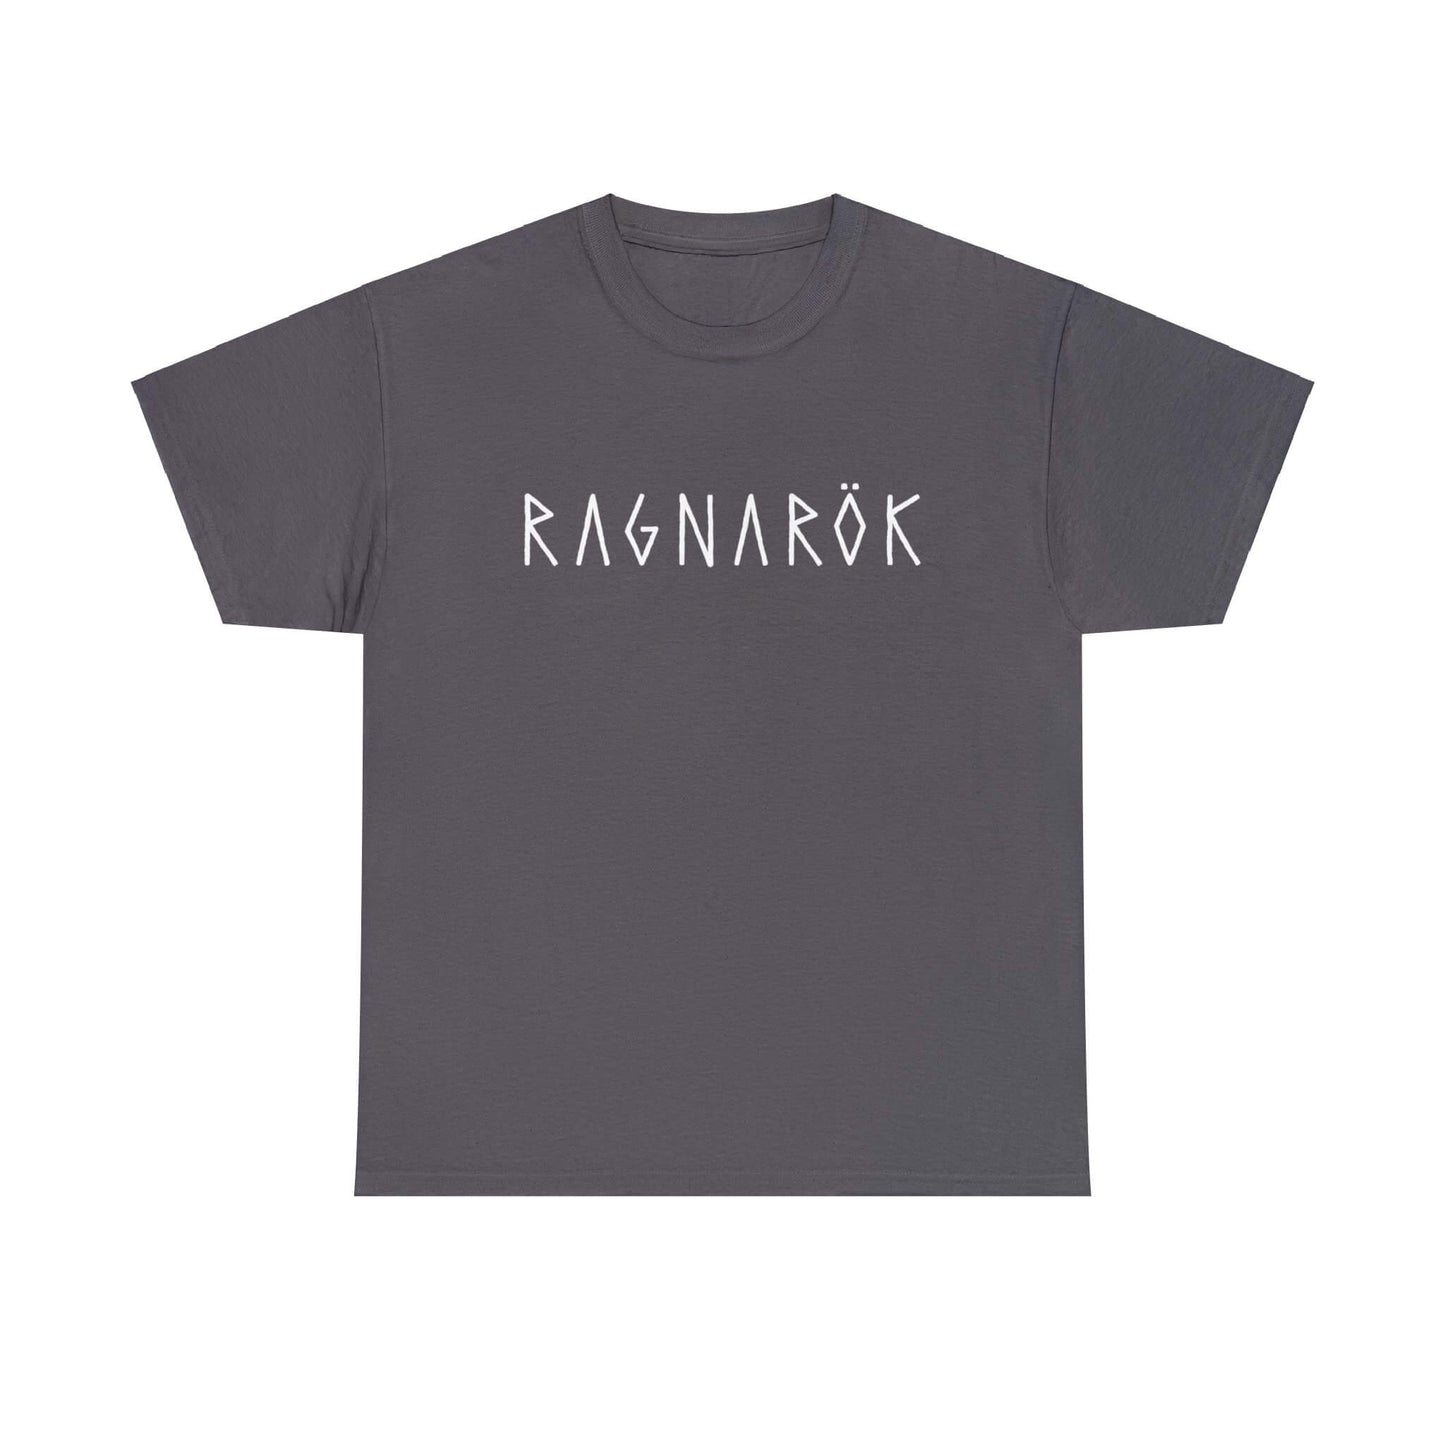 RAGNARÖK Viking T-Shirt, Norse Mythology Warriors Tee Shirt, Unisex